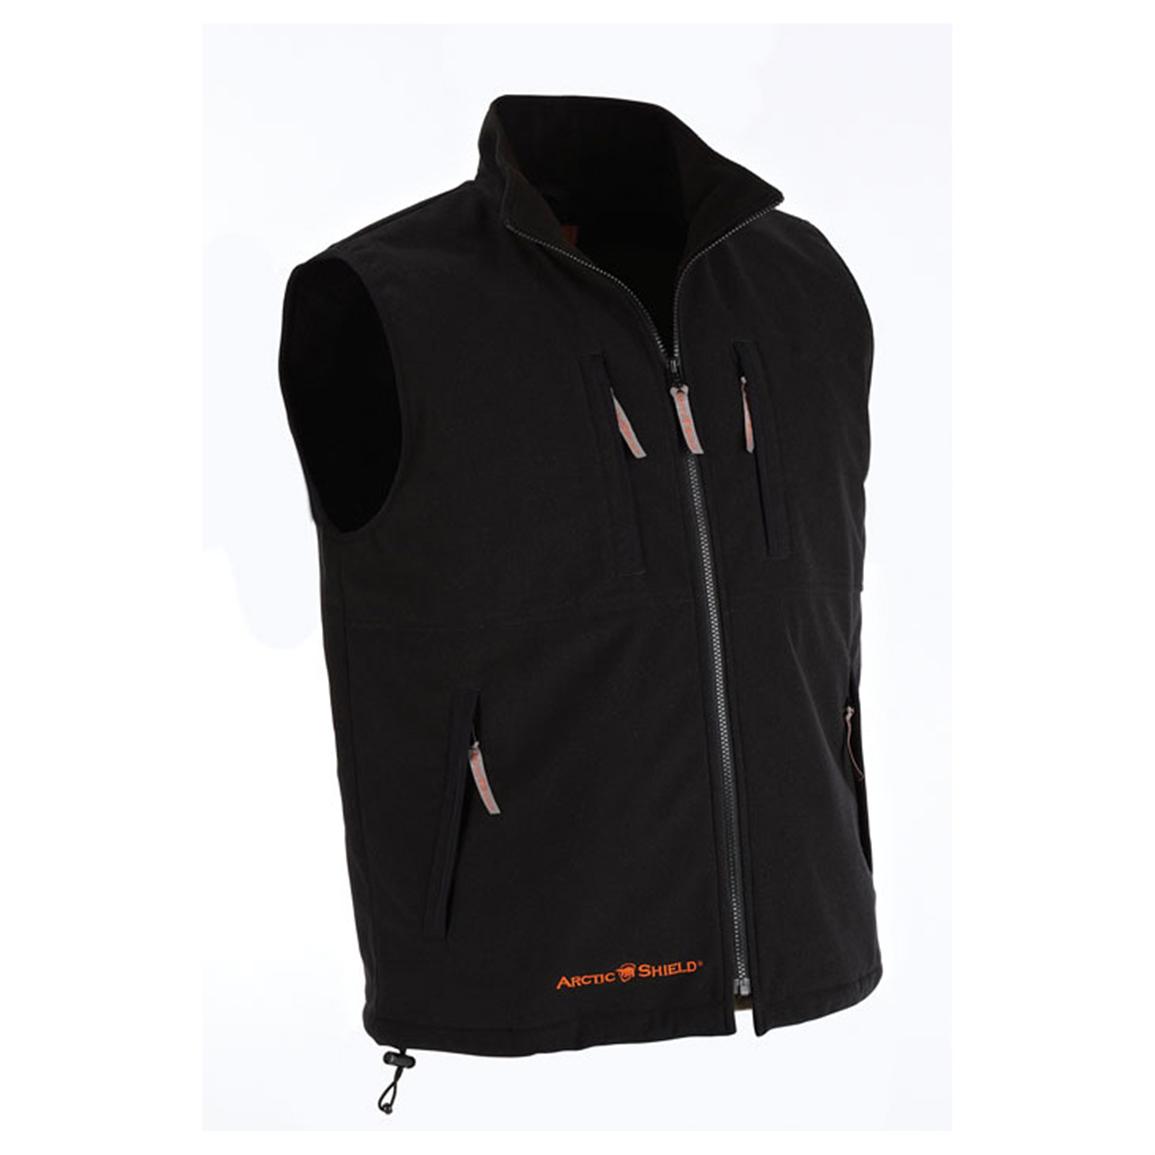 Onyx ArcticShield® Cold Weather Classic Vest, Black - 302328, Vests at